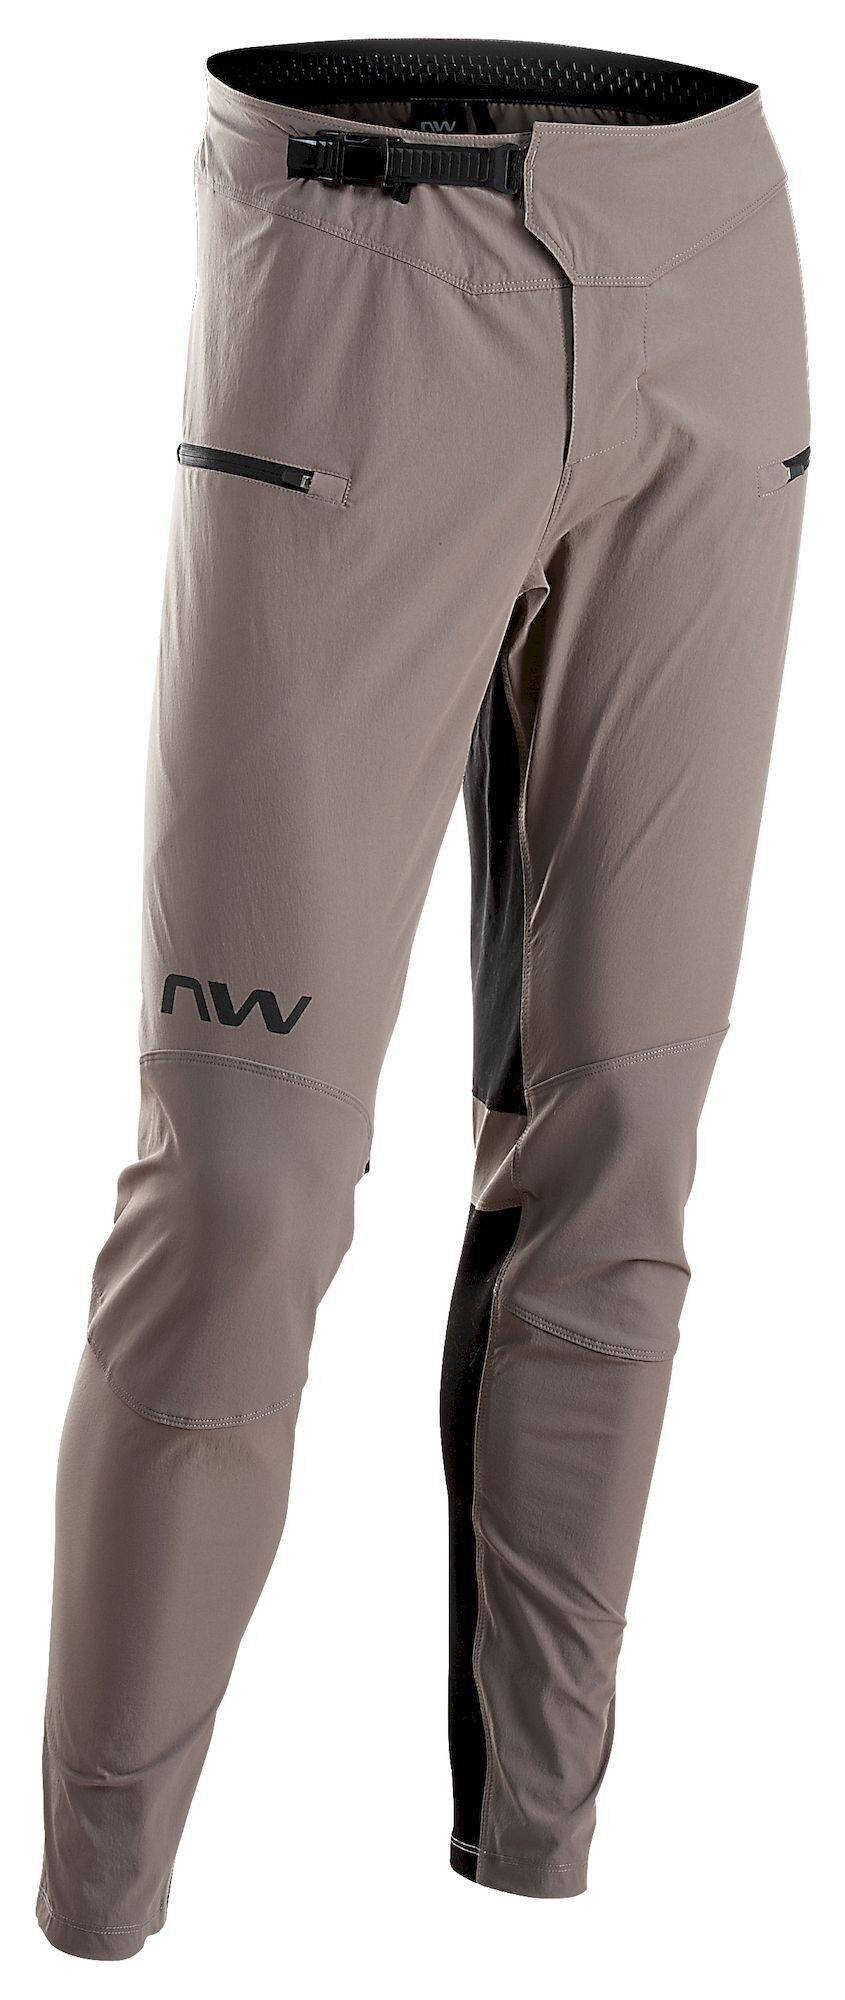 Northwave Bomb Pants - Cycling shorts - Men's